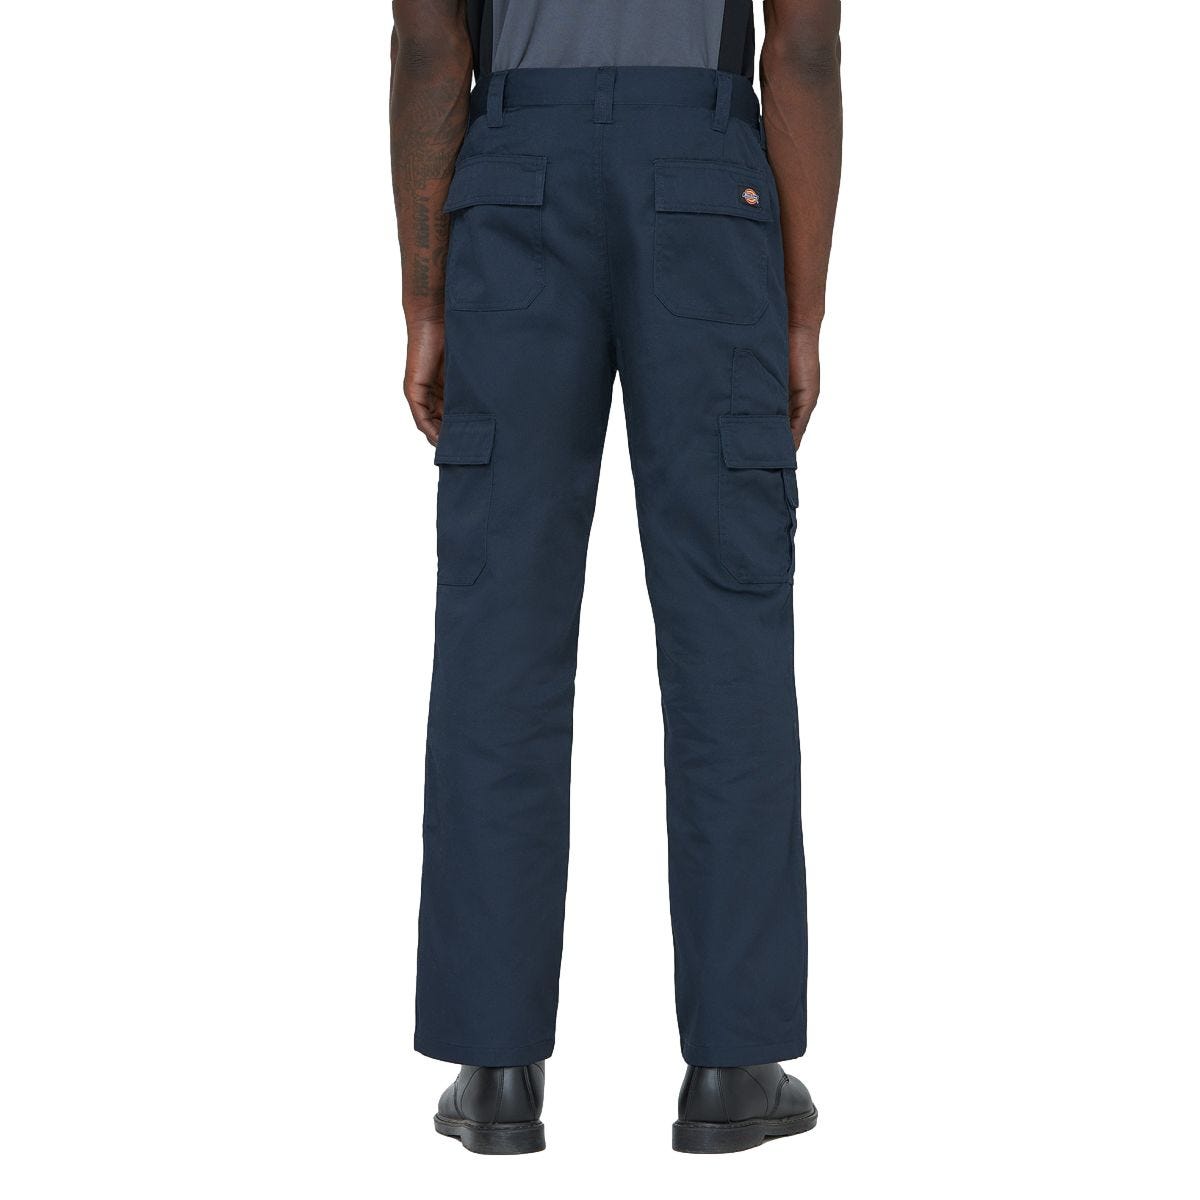 Pantalon Everyday Bleu marine - Dickies - Taille 46 3